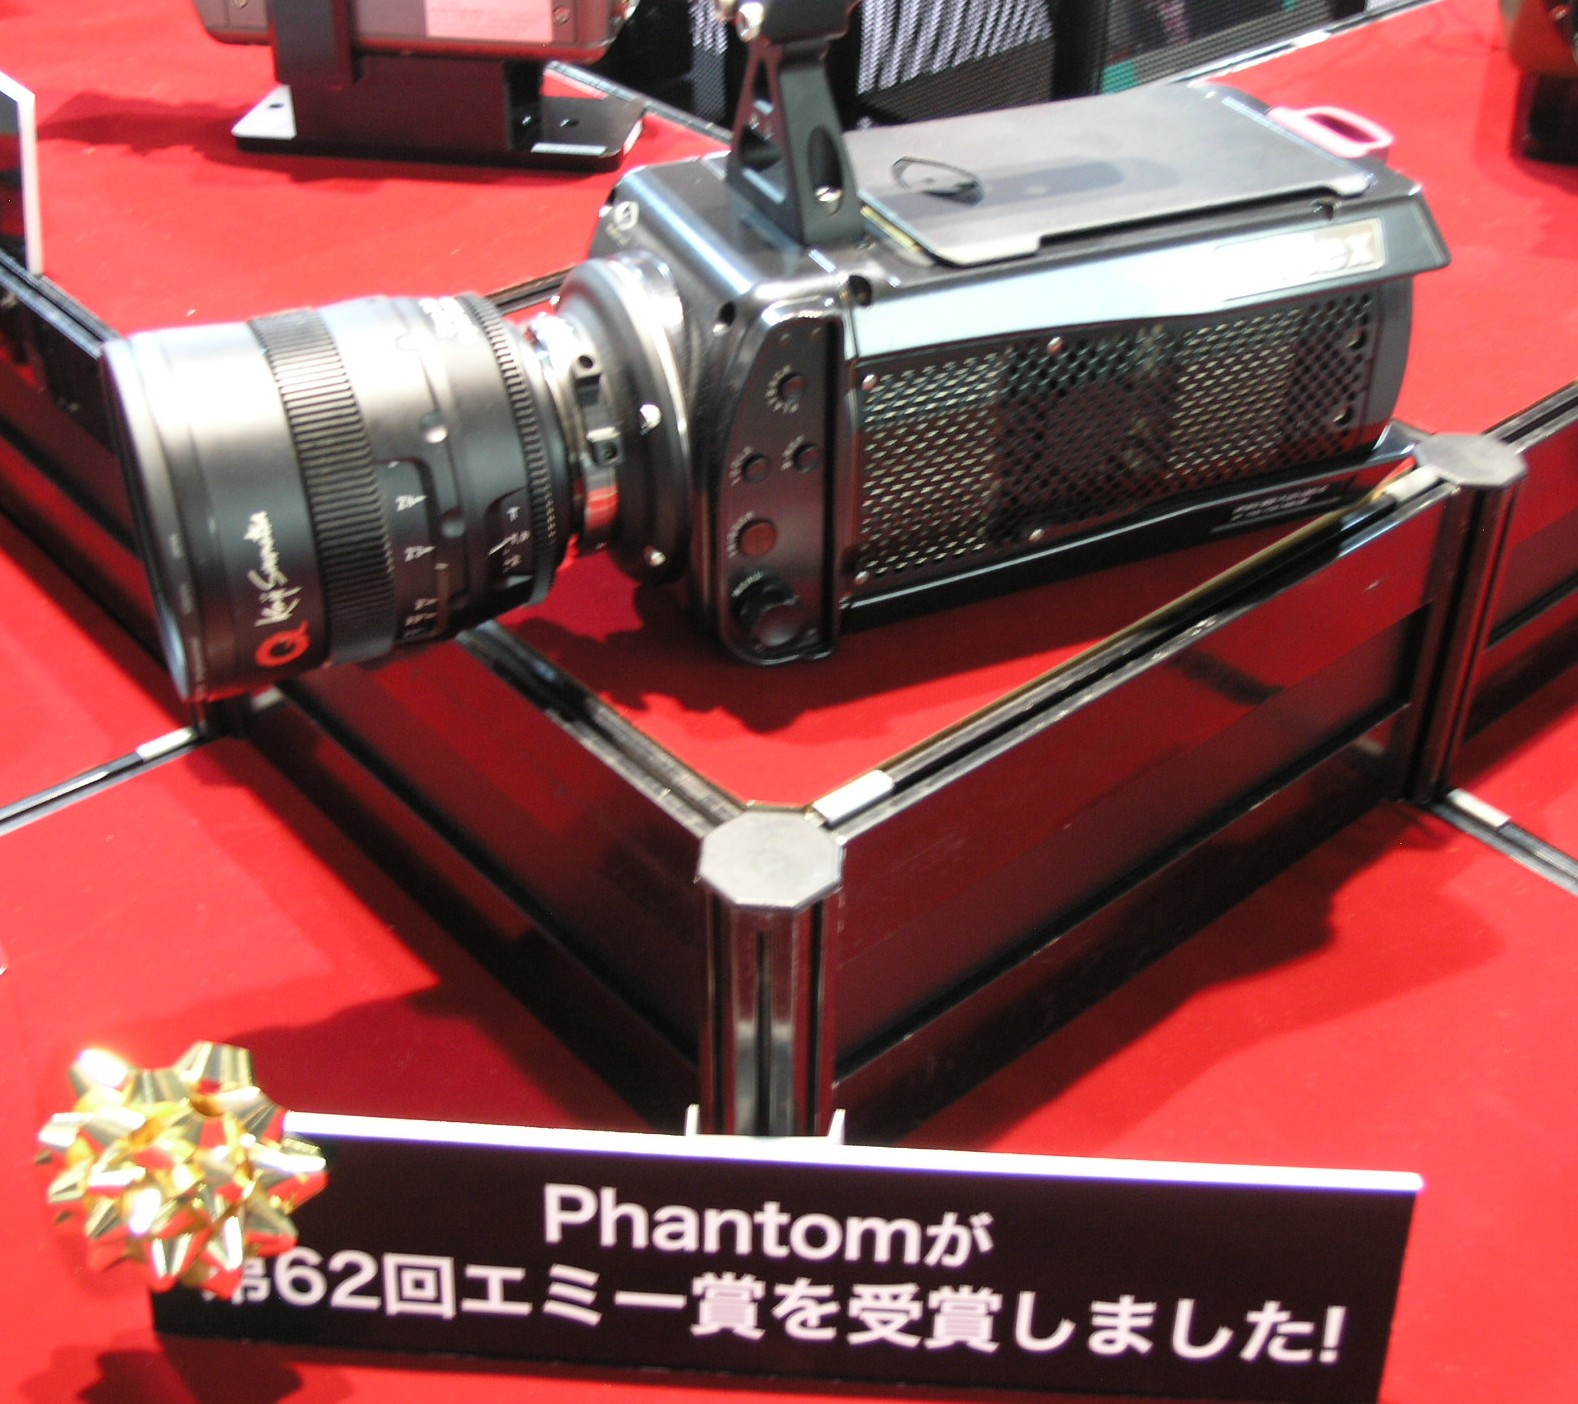 The high-speed Phantom camera (Nobby Tech)